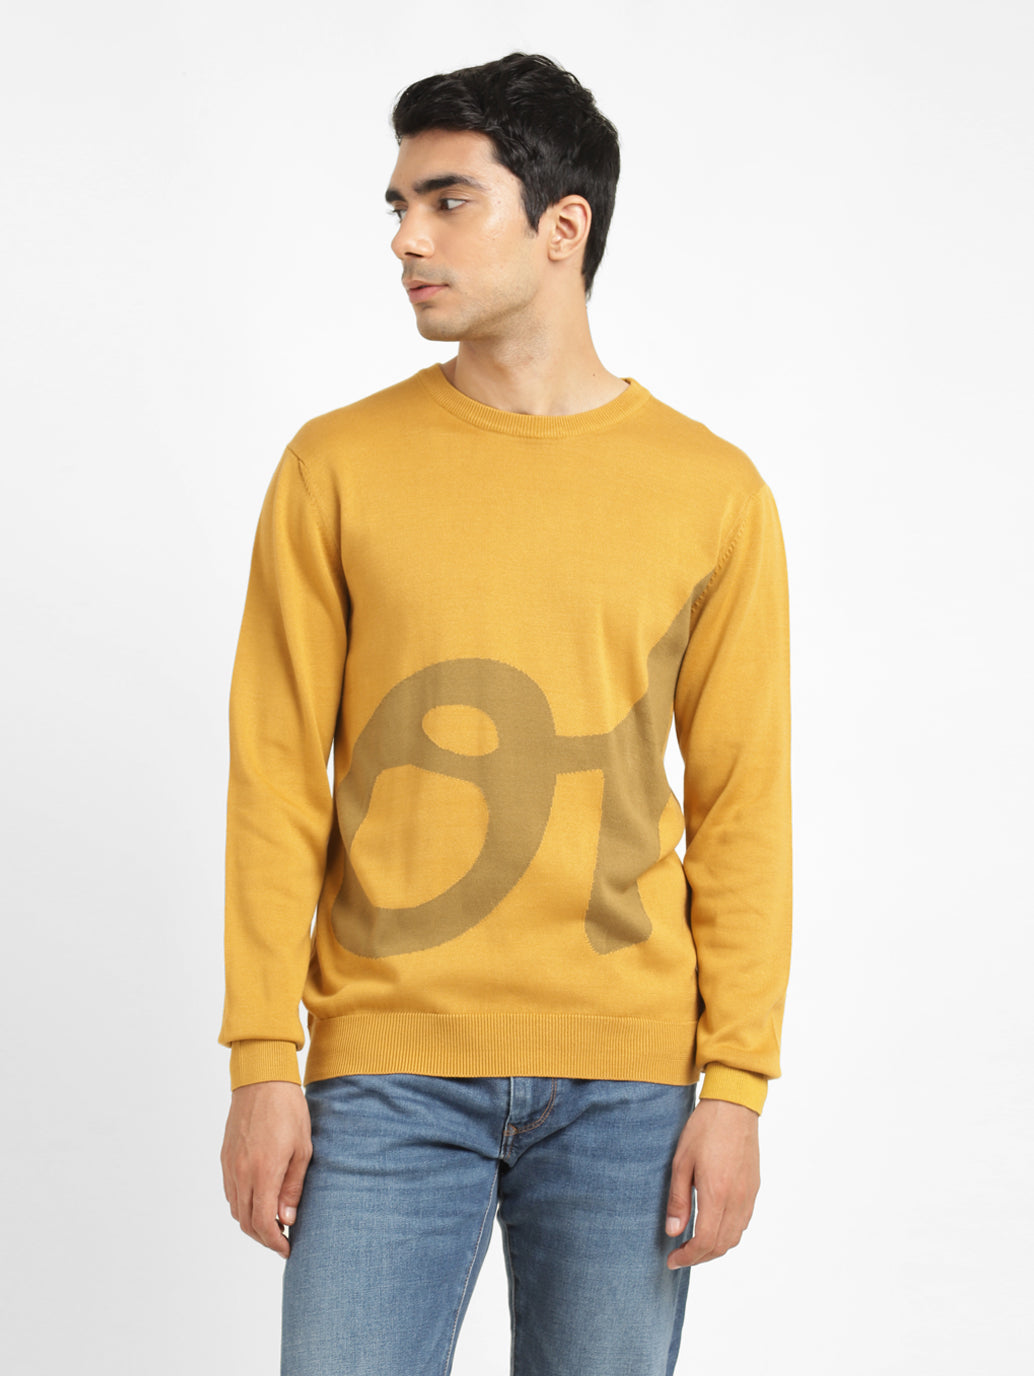 Men's Solid Yellow Crew Neck Sweater